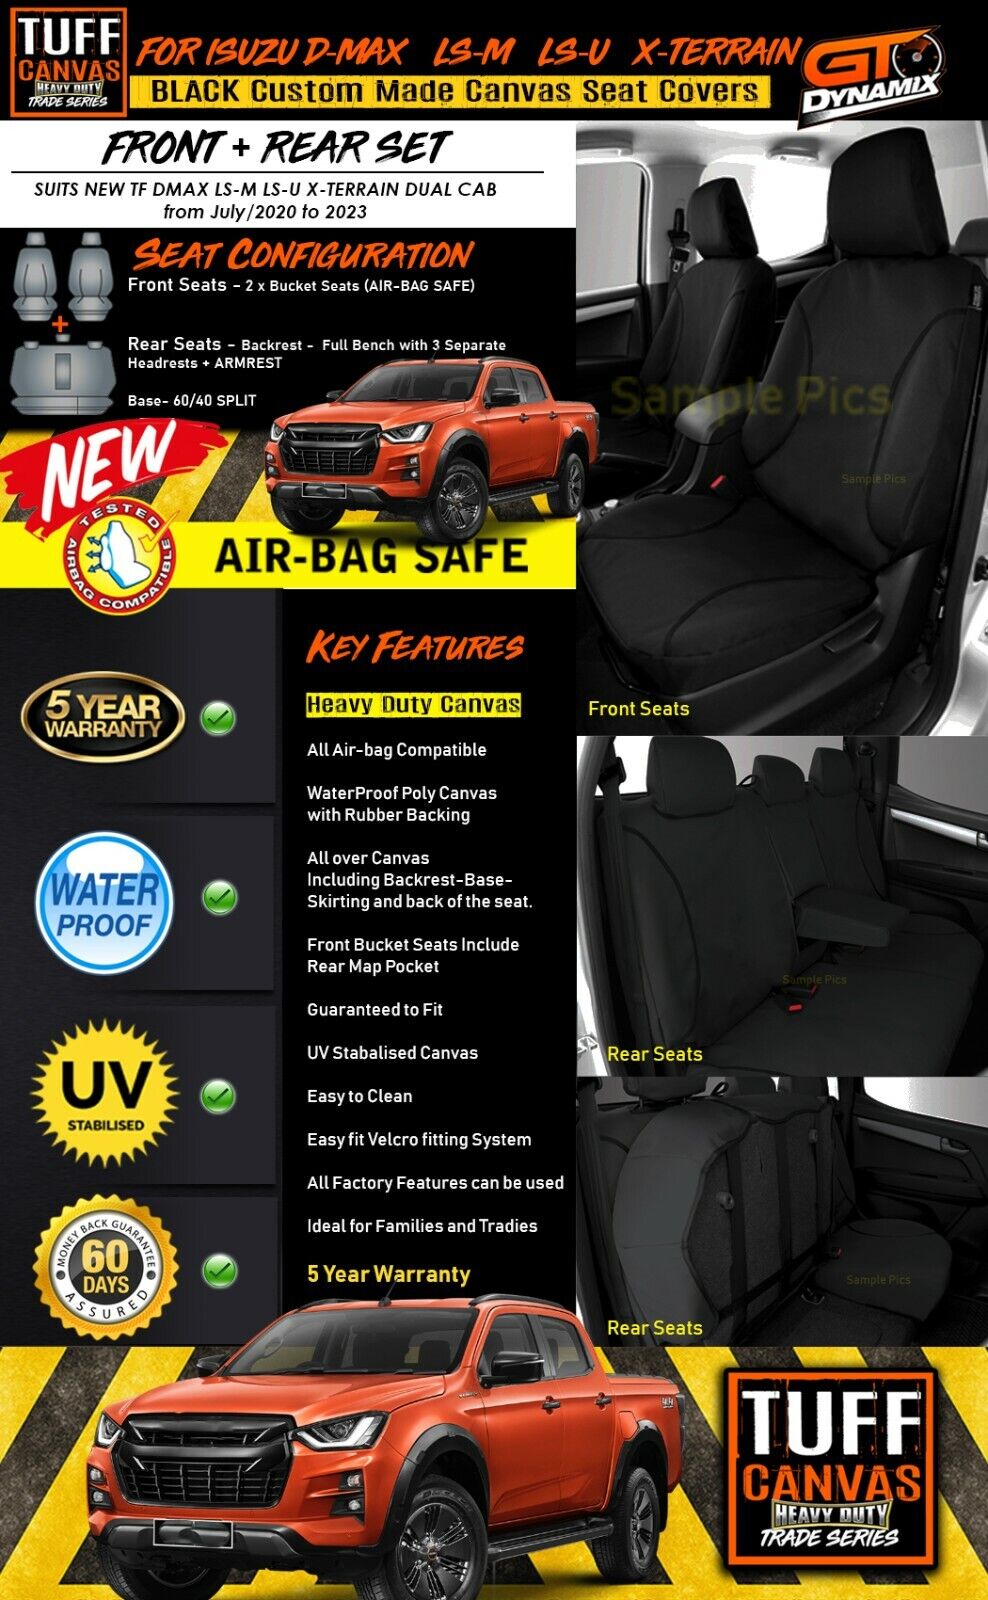 Tuff HD TRADE Canvas Seat Covers 2 Row + Dash Mat For Isuzu DMAX TF W/TRAY 2020-2024 DM1593 Black